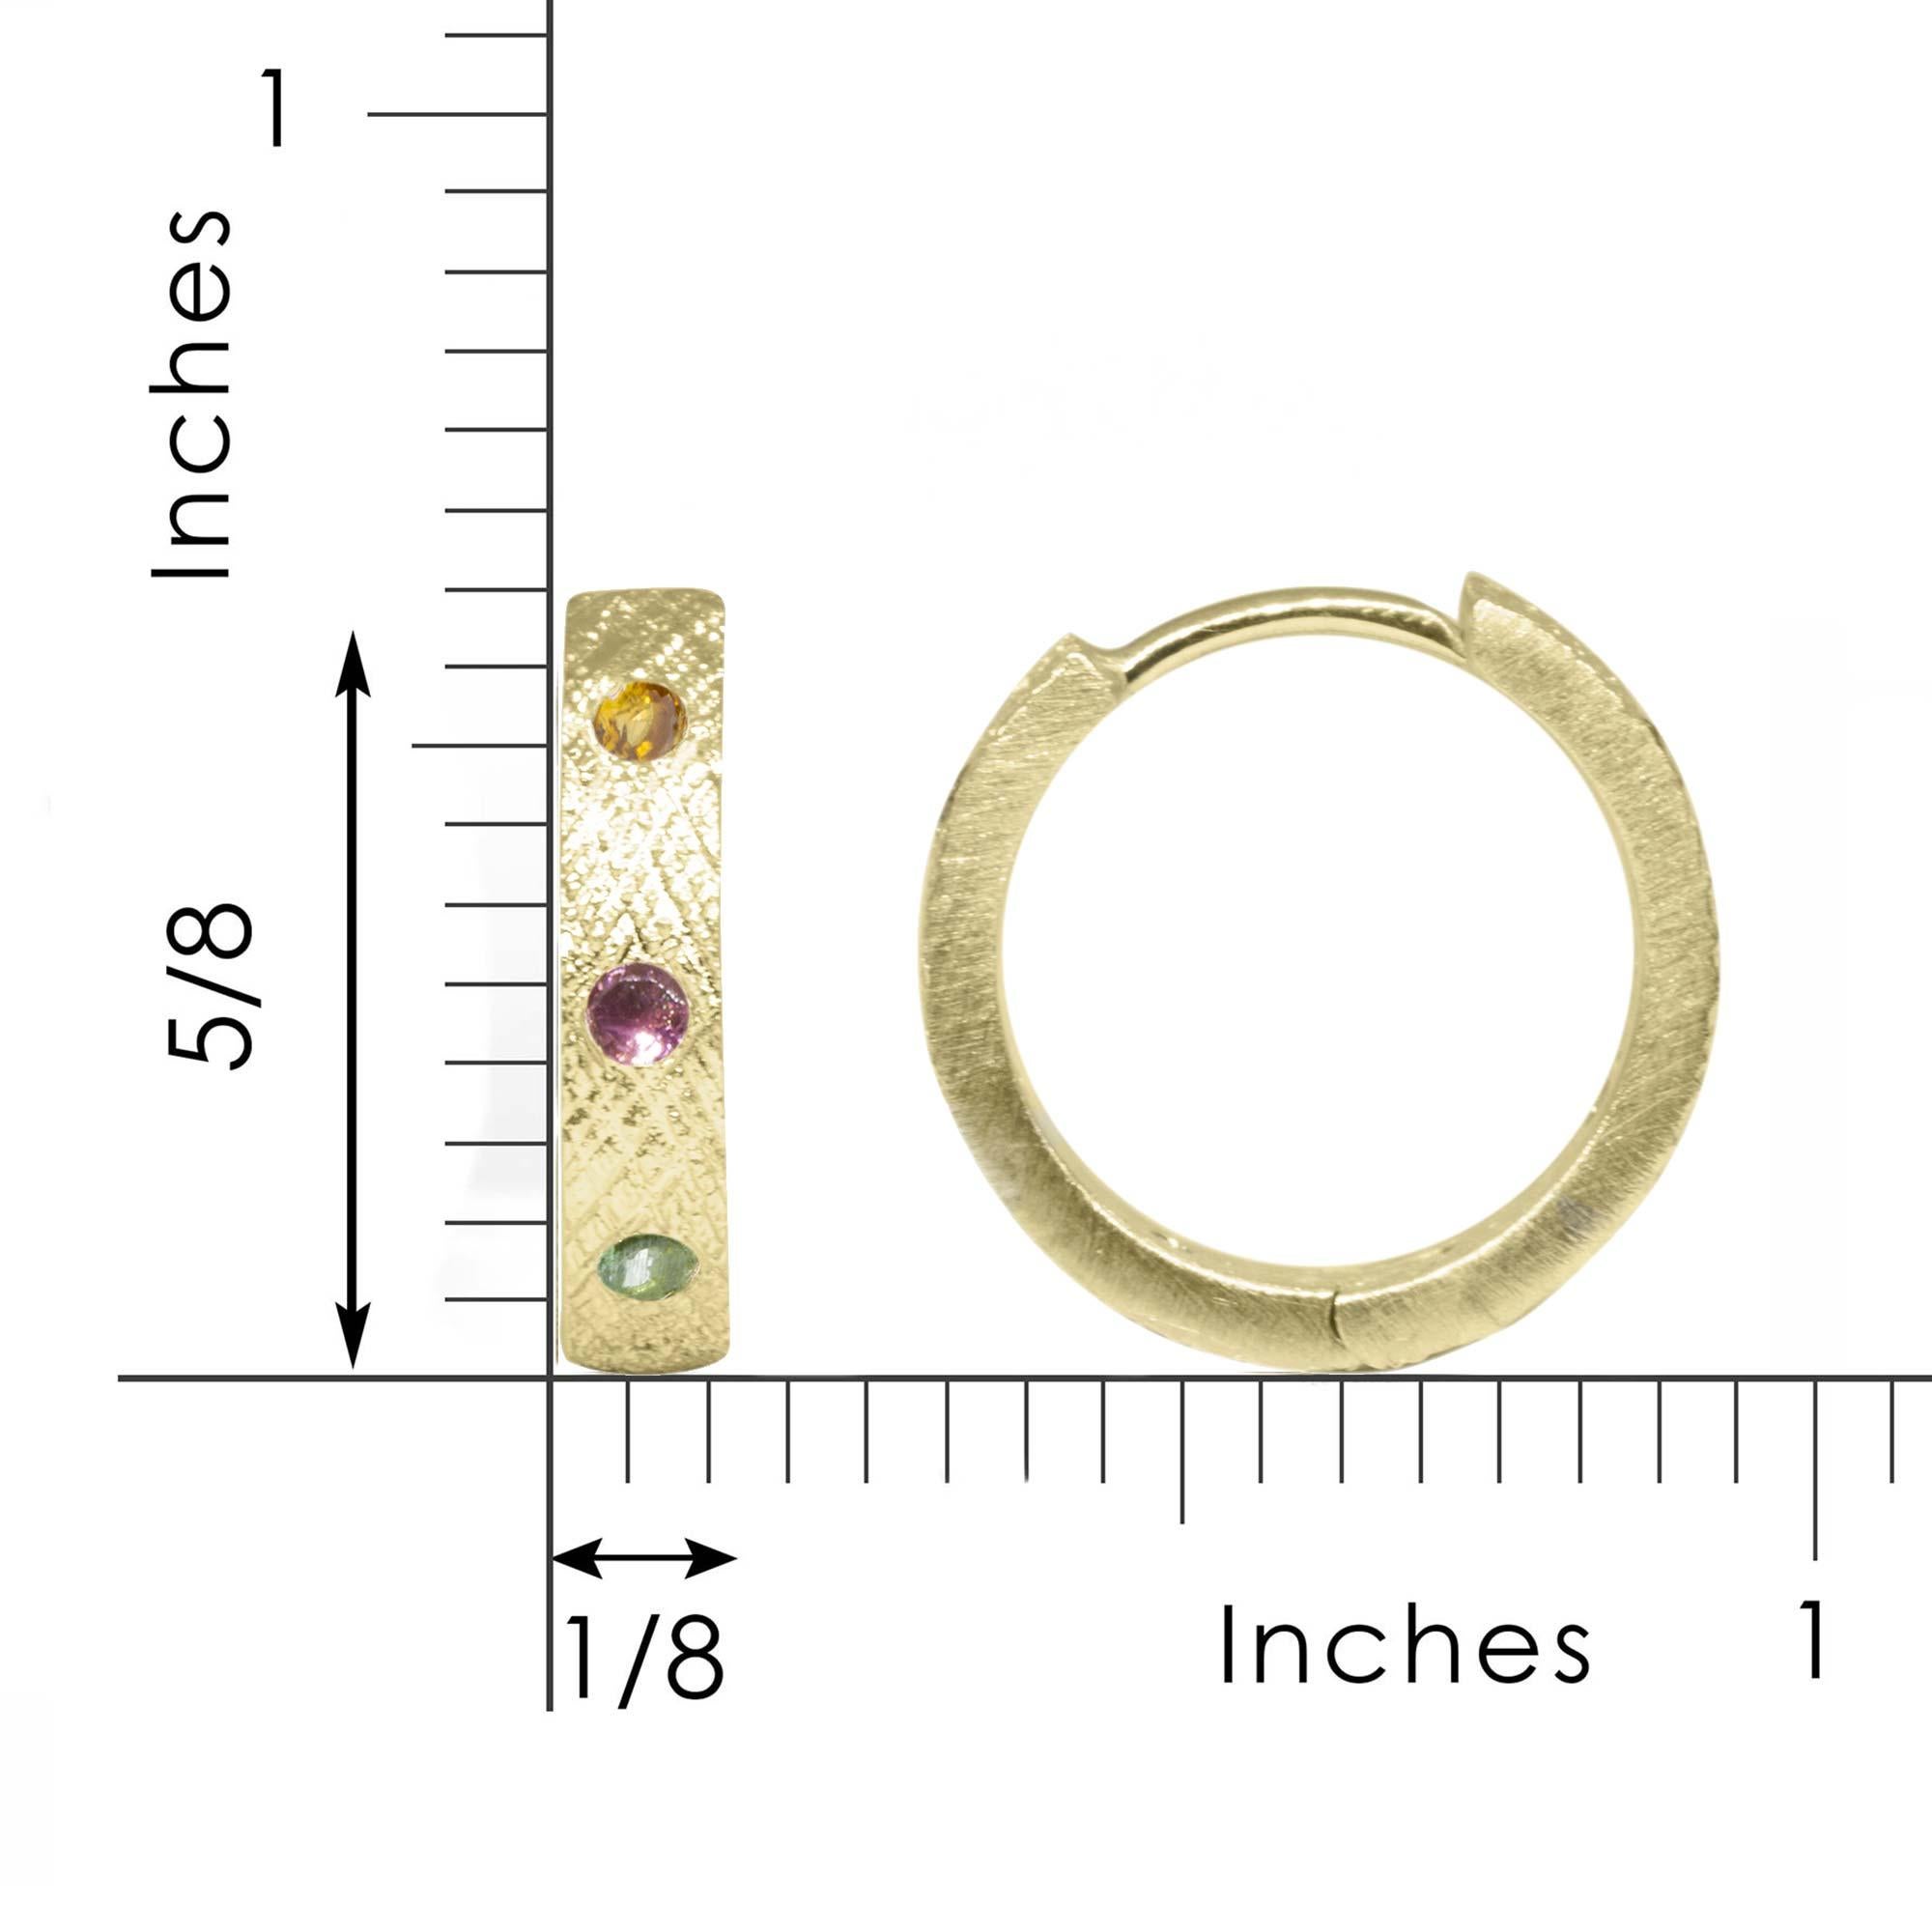 18k florentine disc earrings